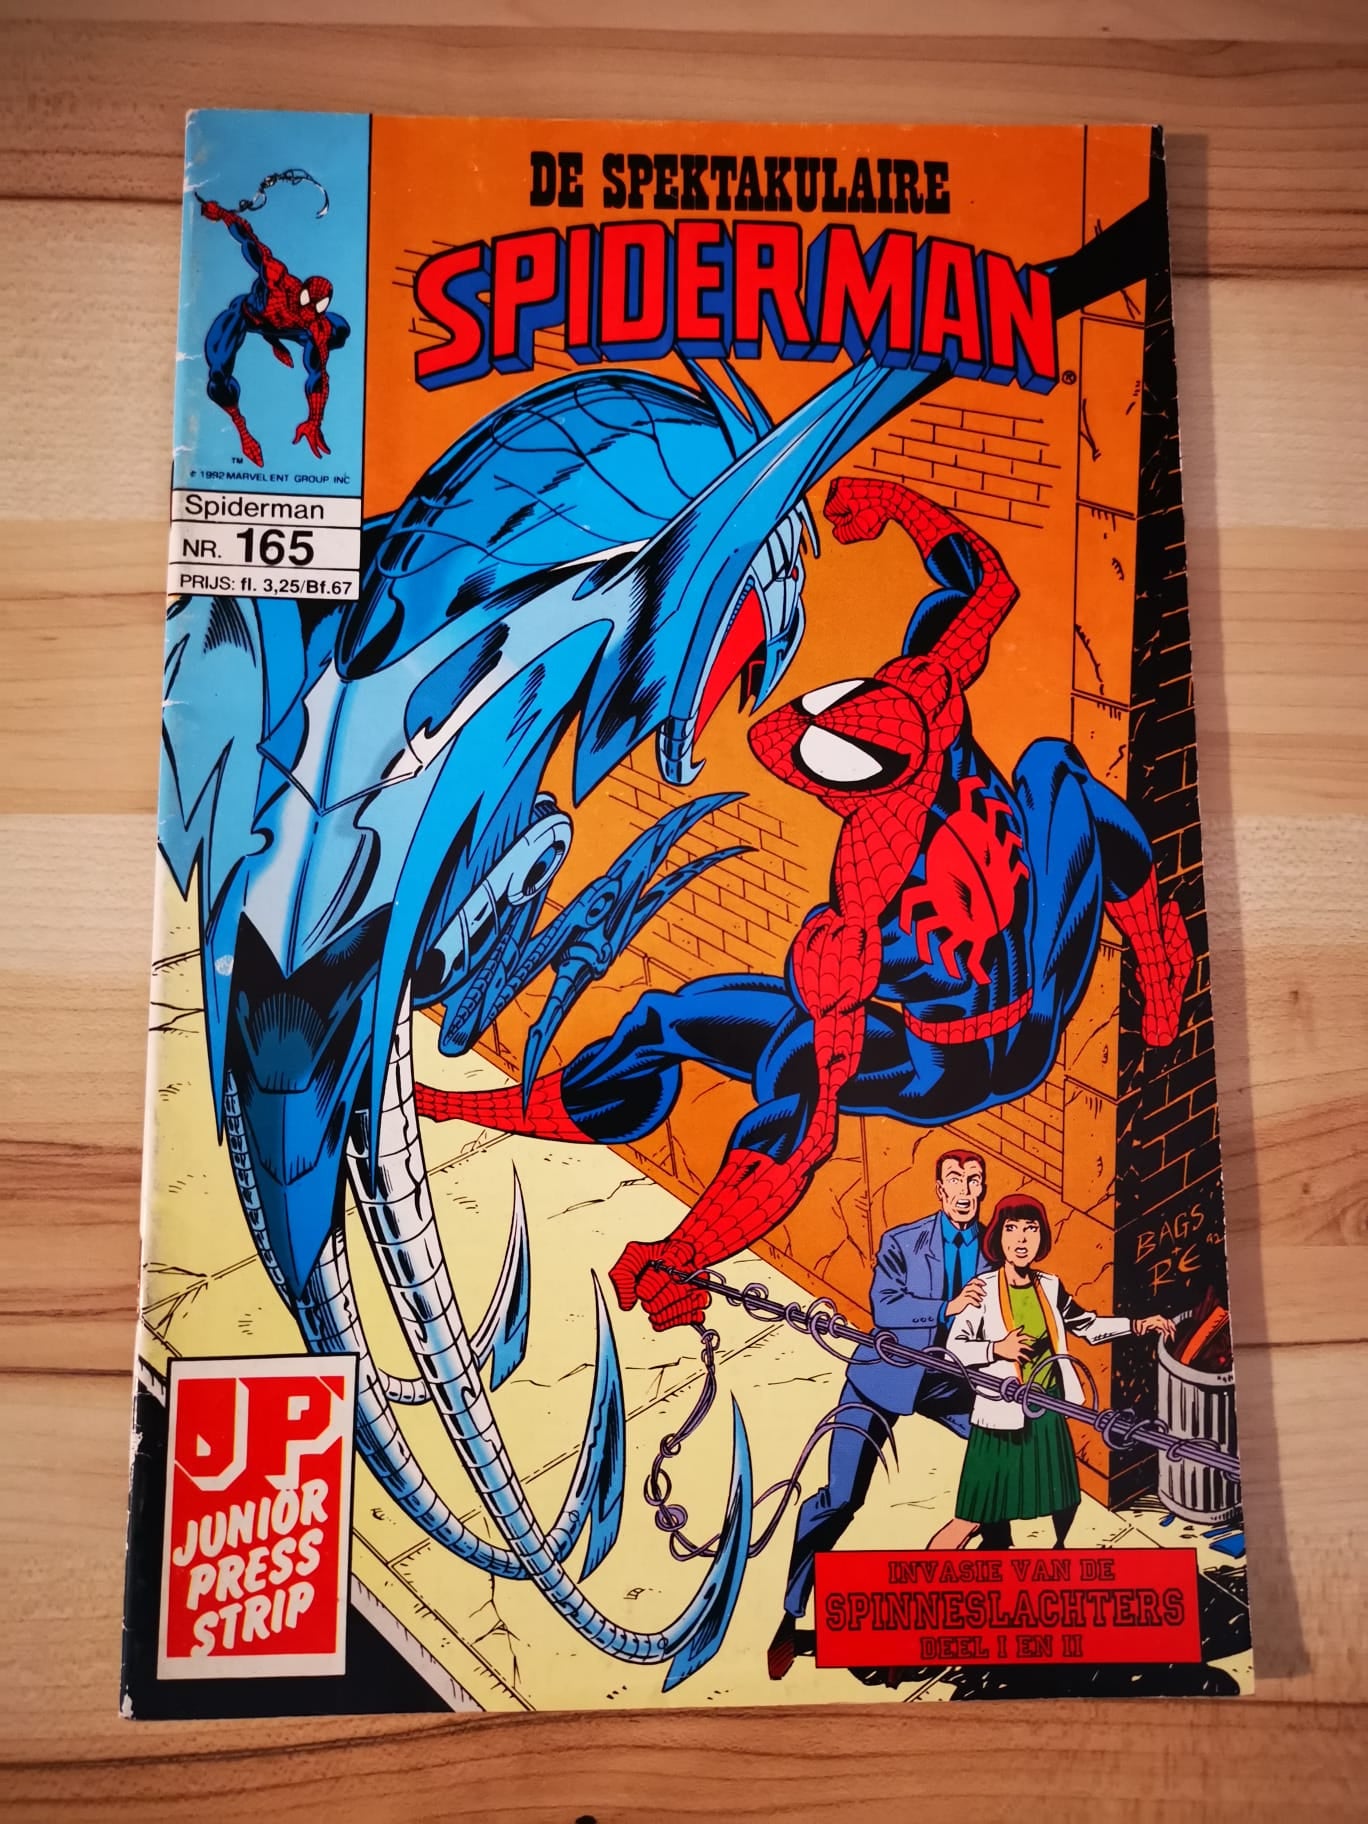 De spektakulaire spiderman #165